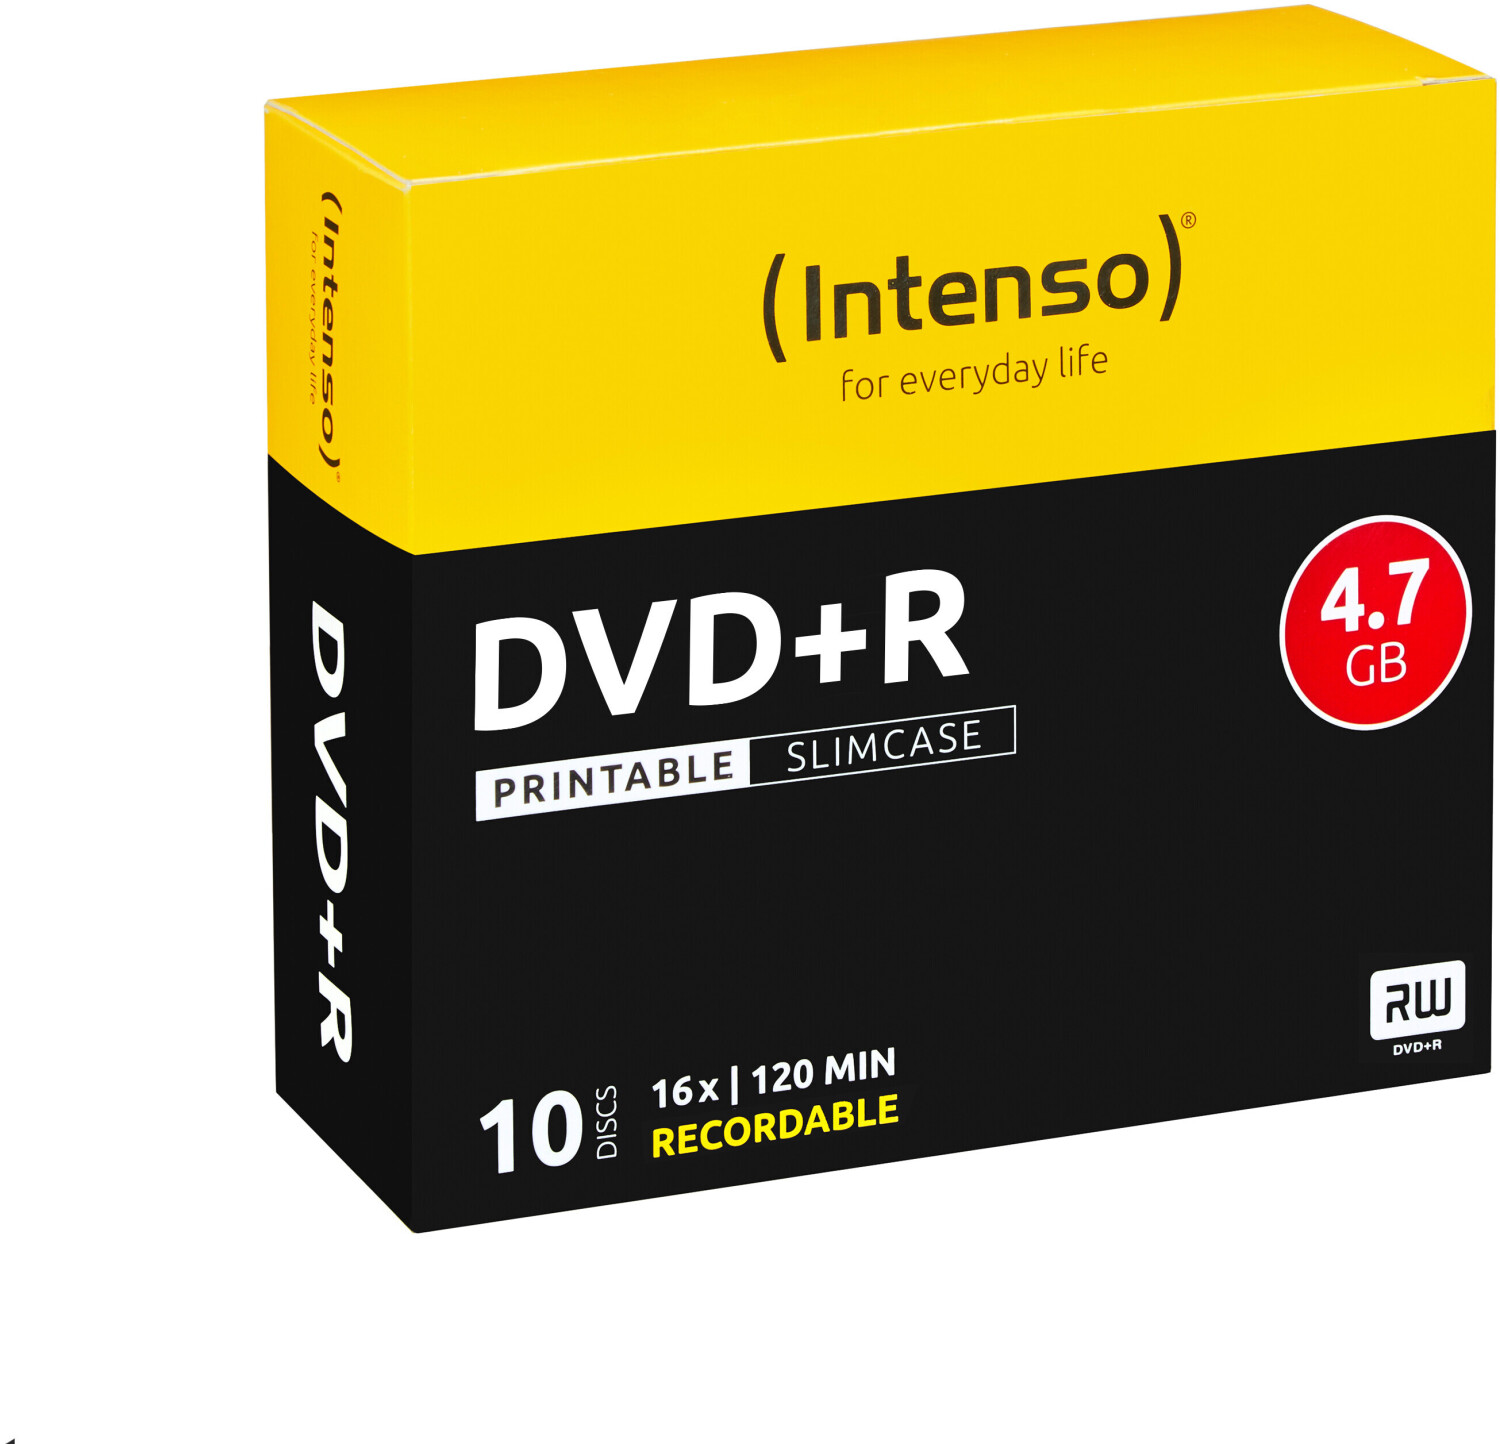 Intenso DVD+R 4,7GB 120min 16x printable 10pk Slim Case